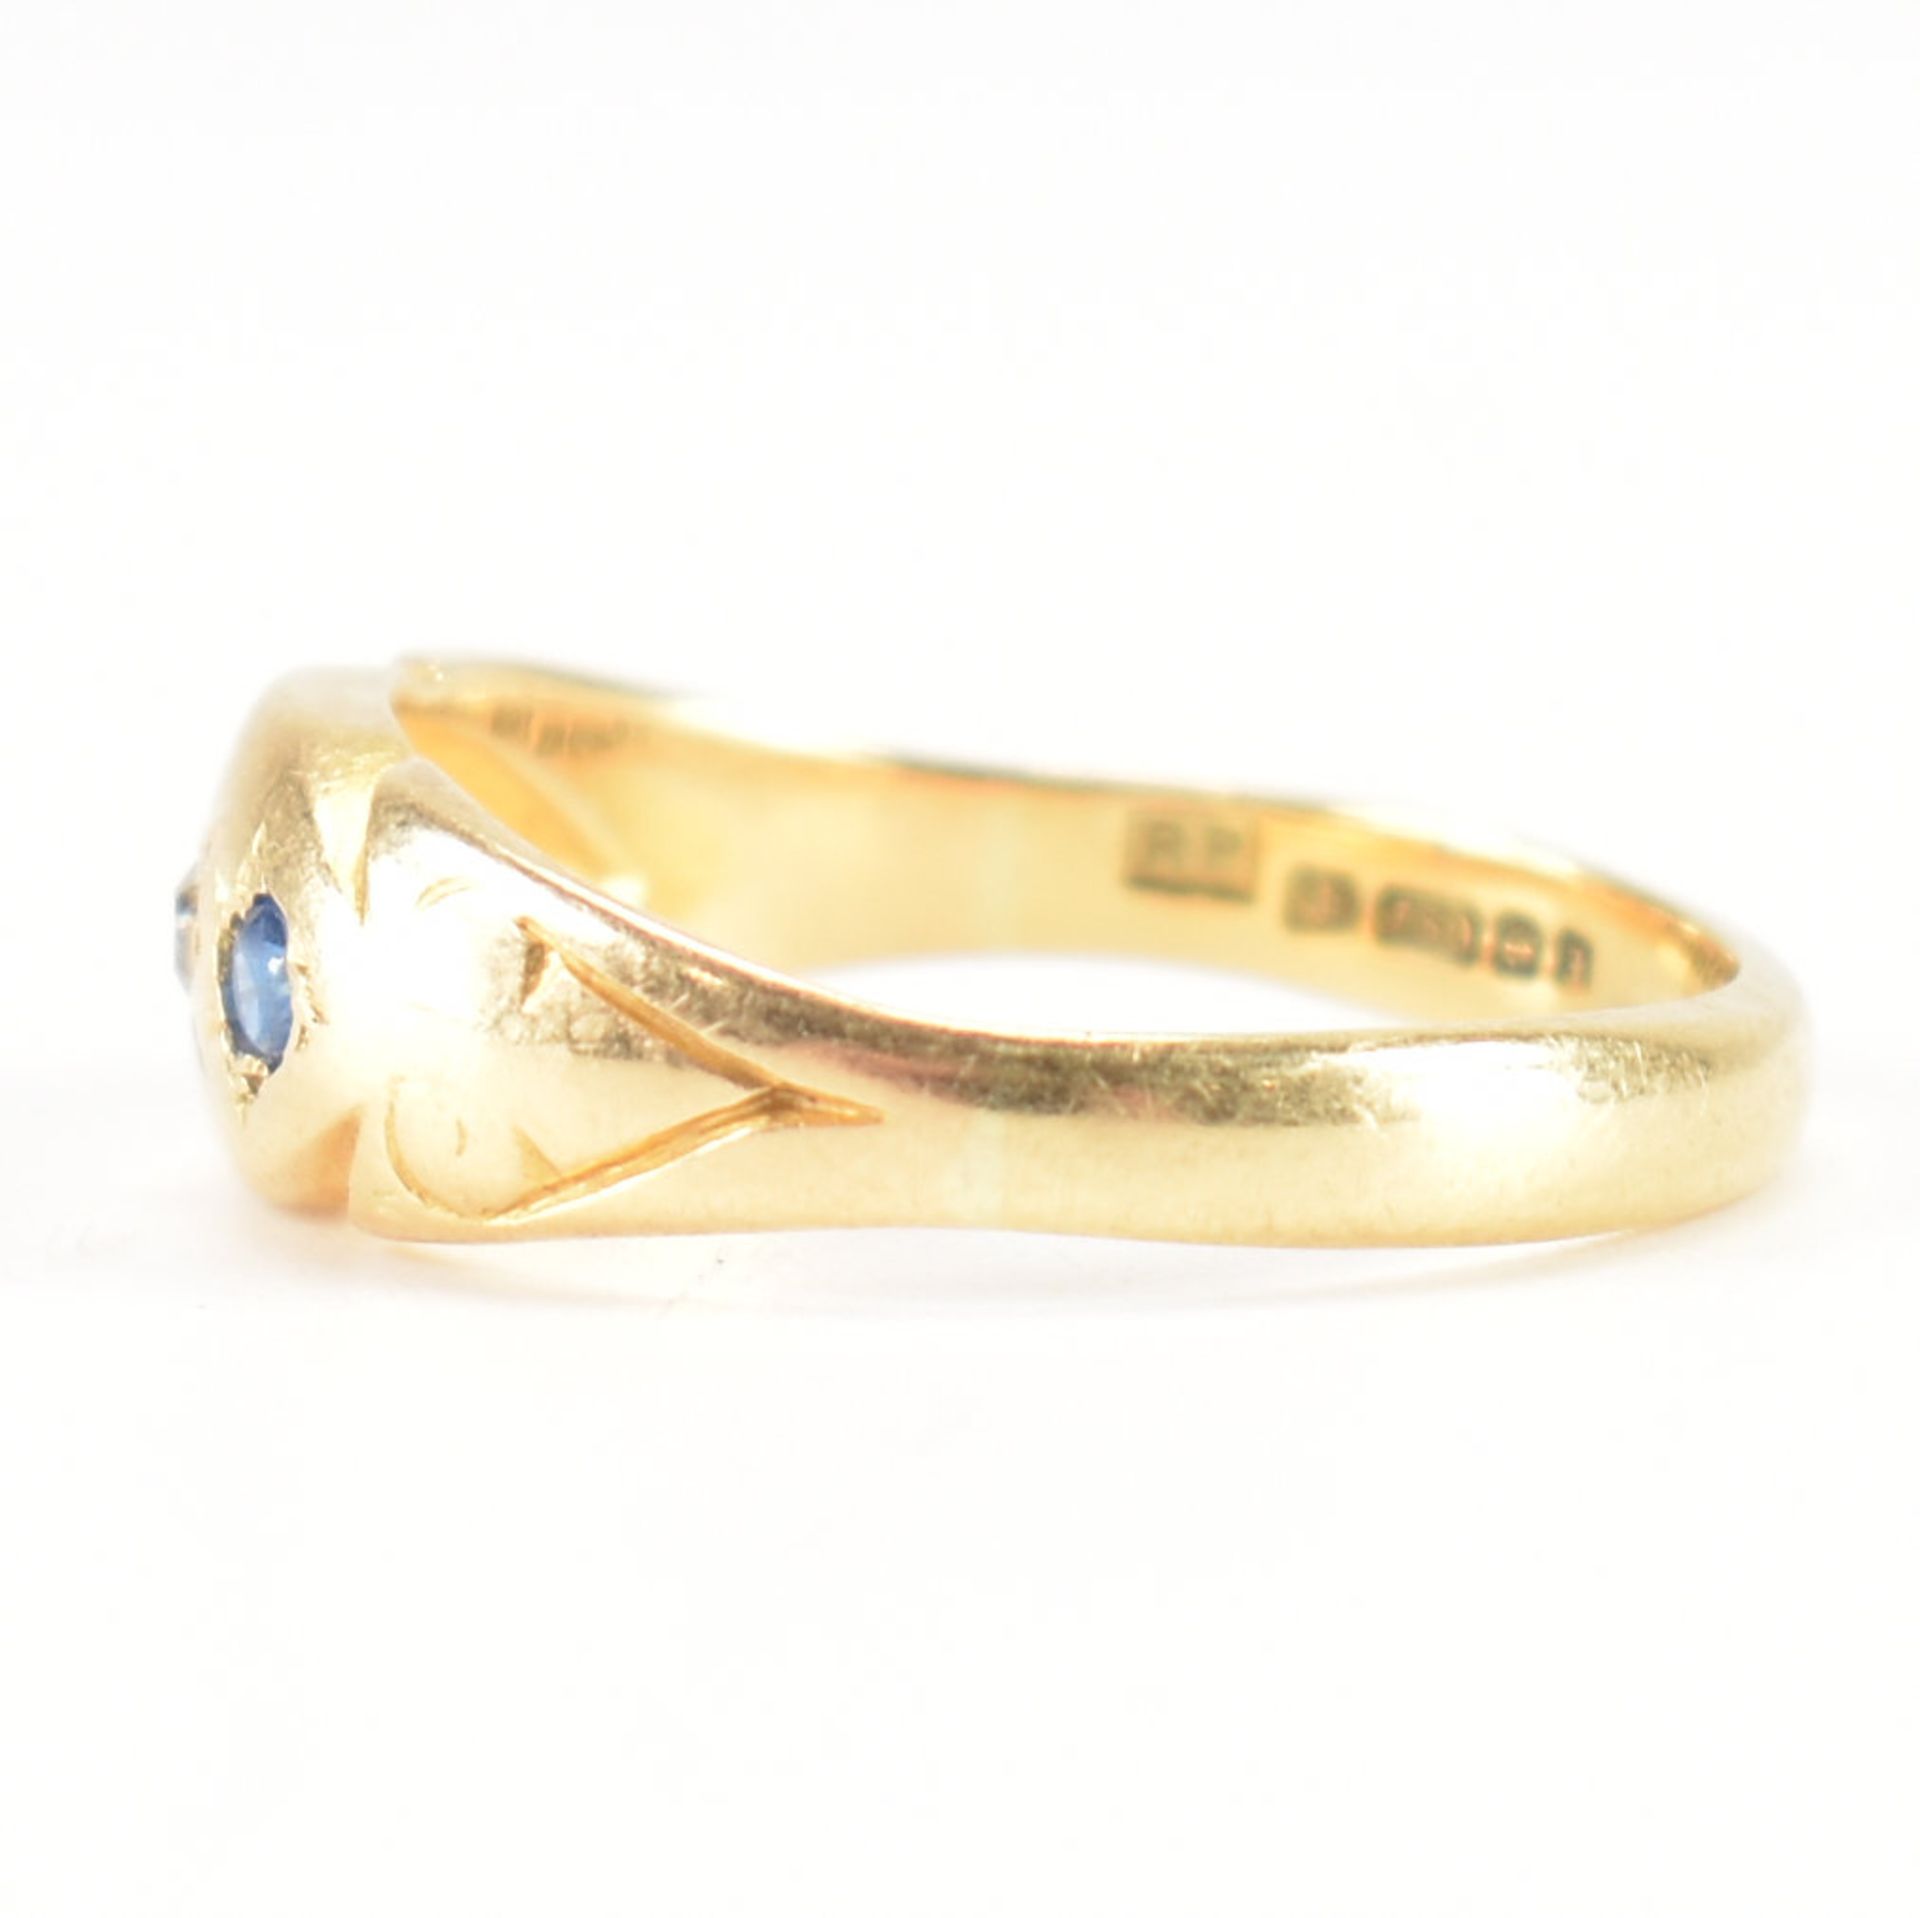 HALLMARKED 18CT GOLD DIAMOND & BLUE STONE RING - Image 3 of 9